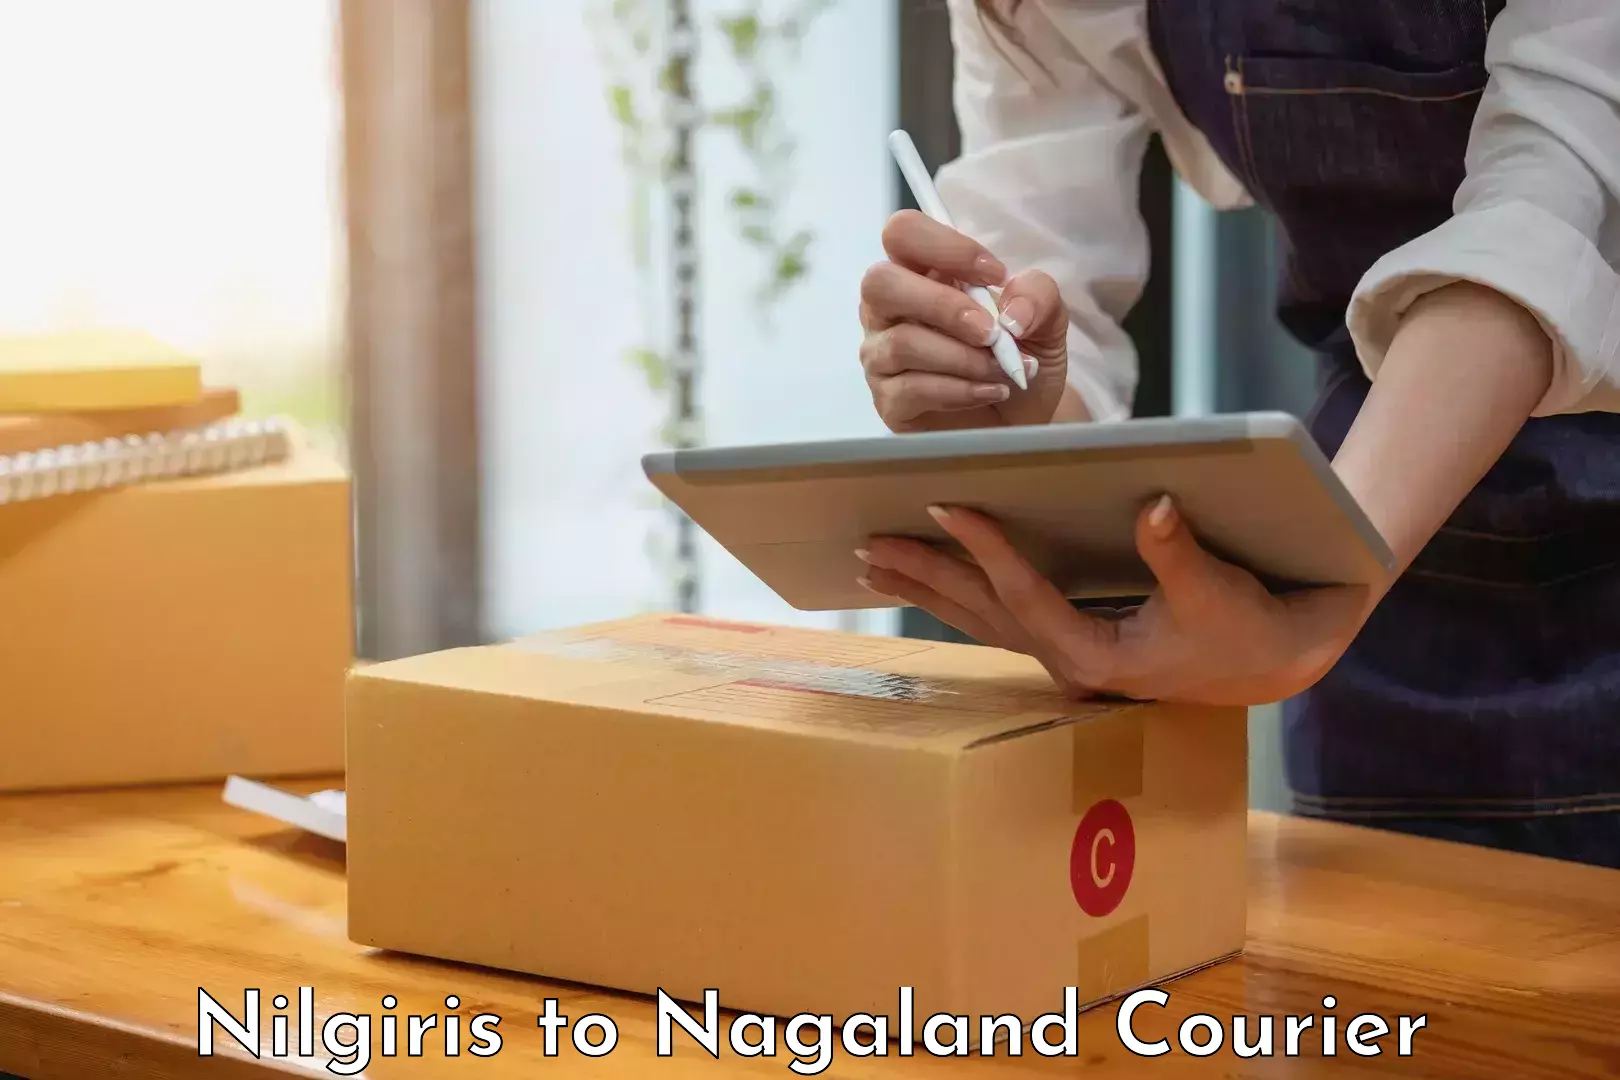 Cash on delivery service Nilgiris to Dimapur